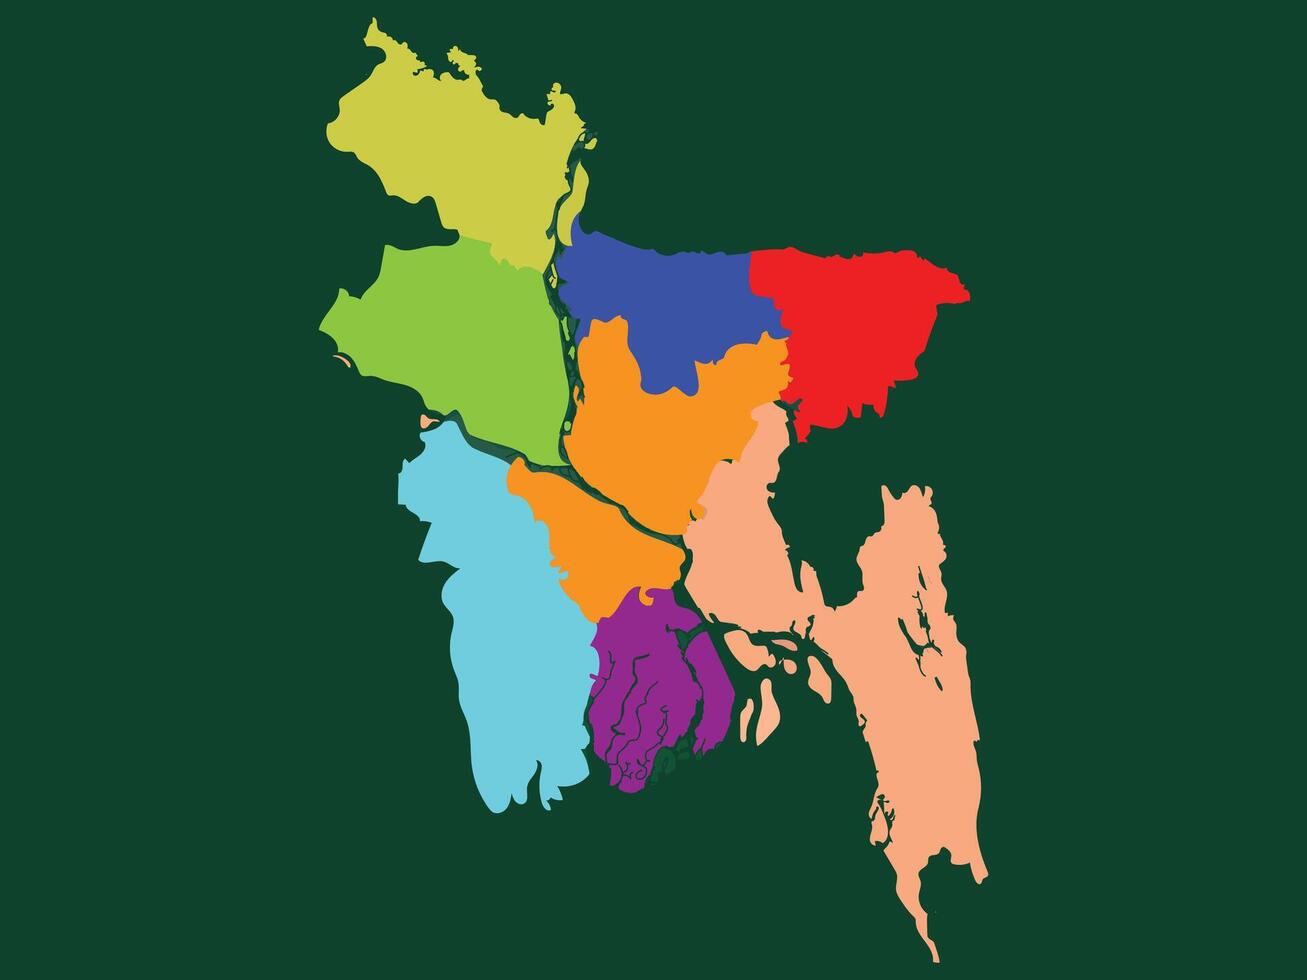 Bangladesh map illustration vector